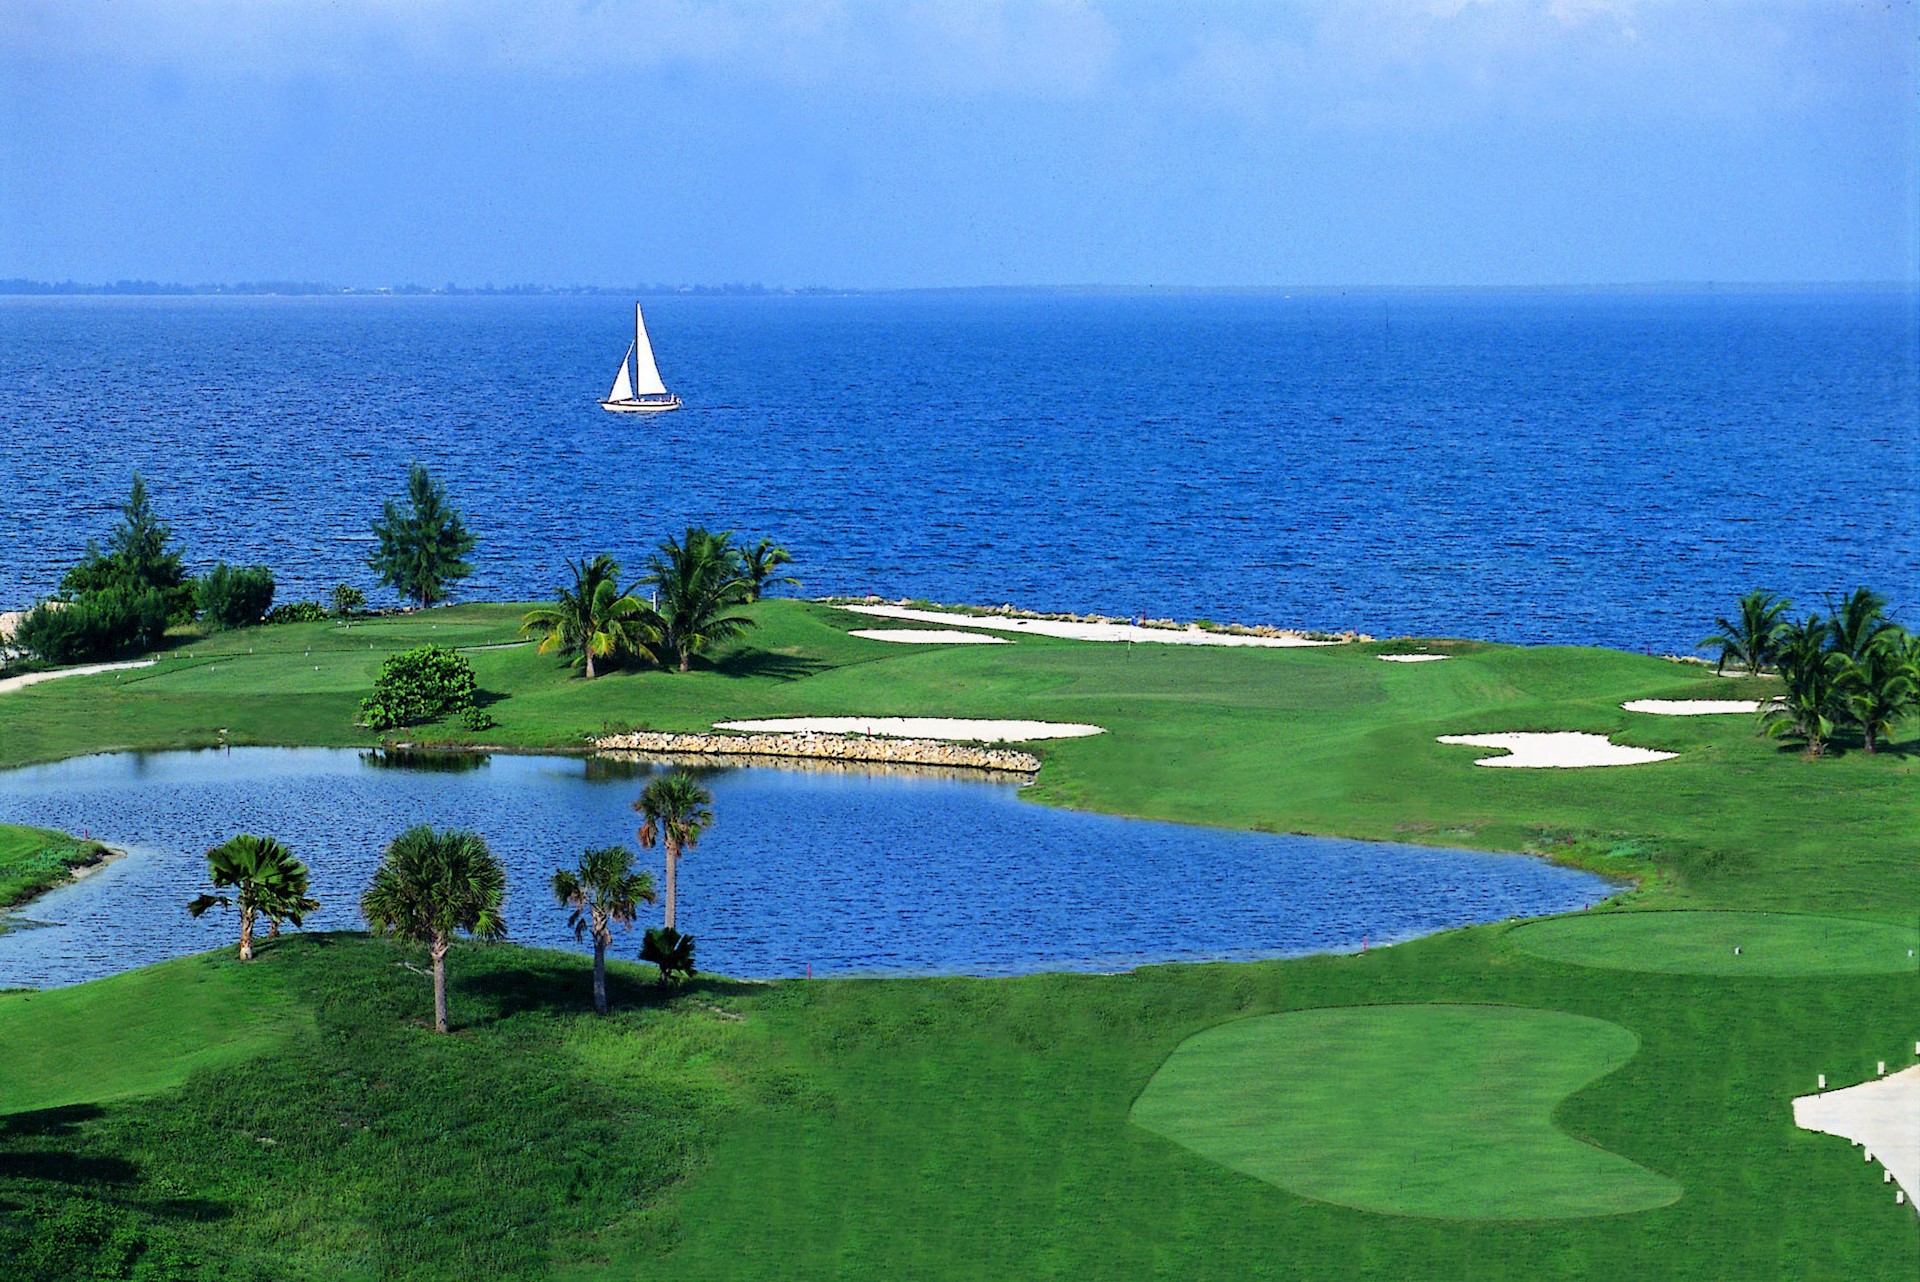 The North Sound Golf Club – A World-class 18 Hole Golf Course on Grand Cayman